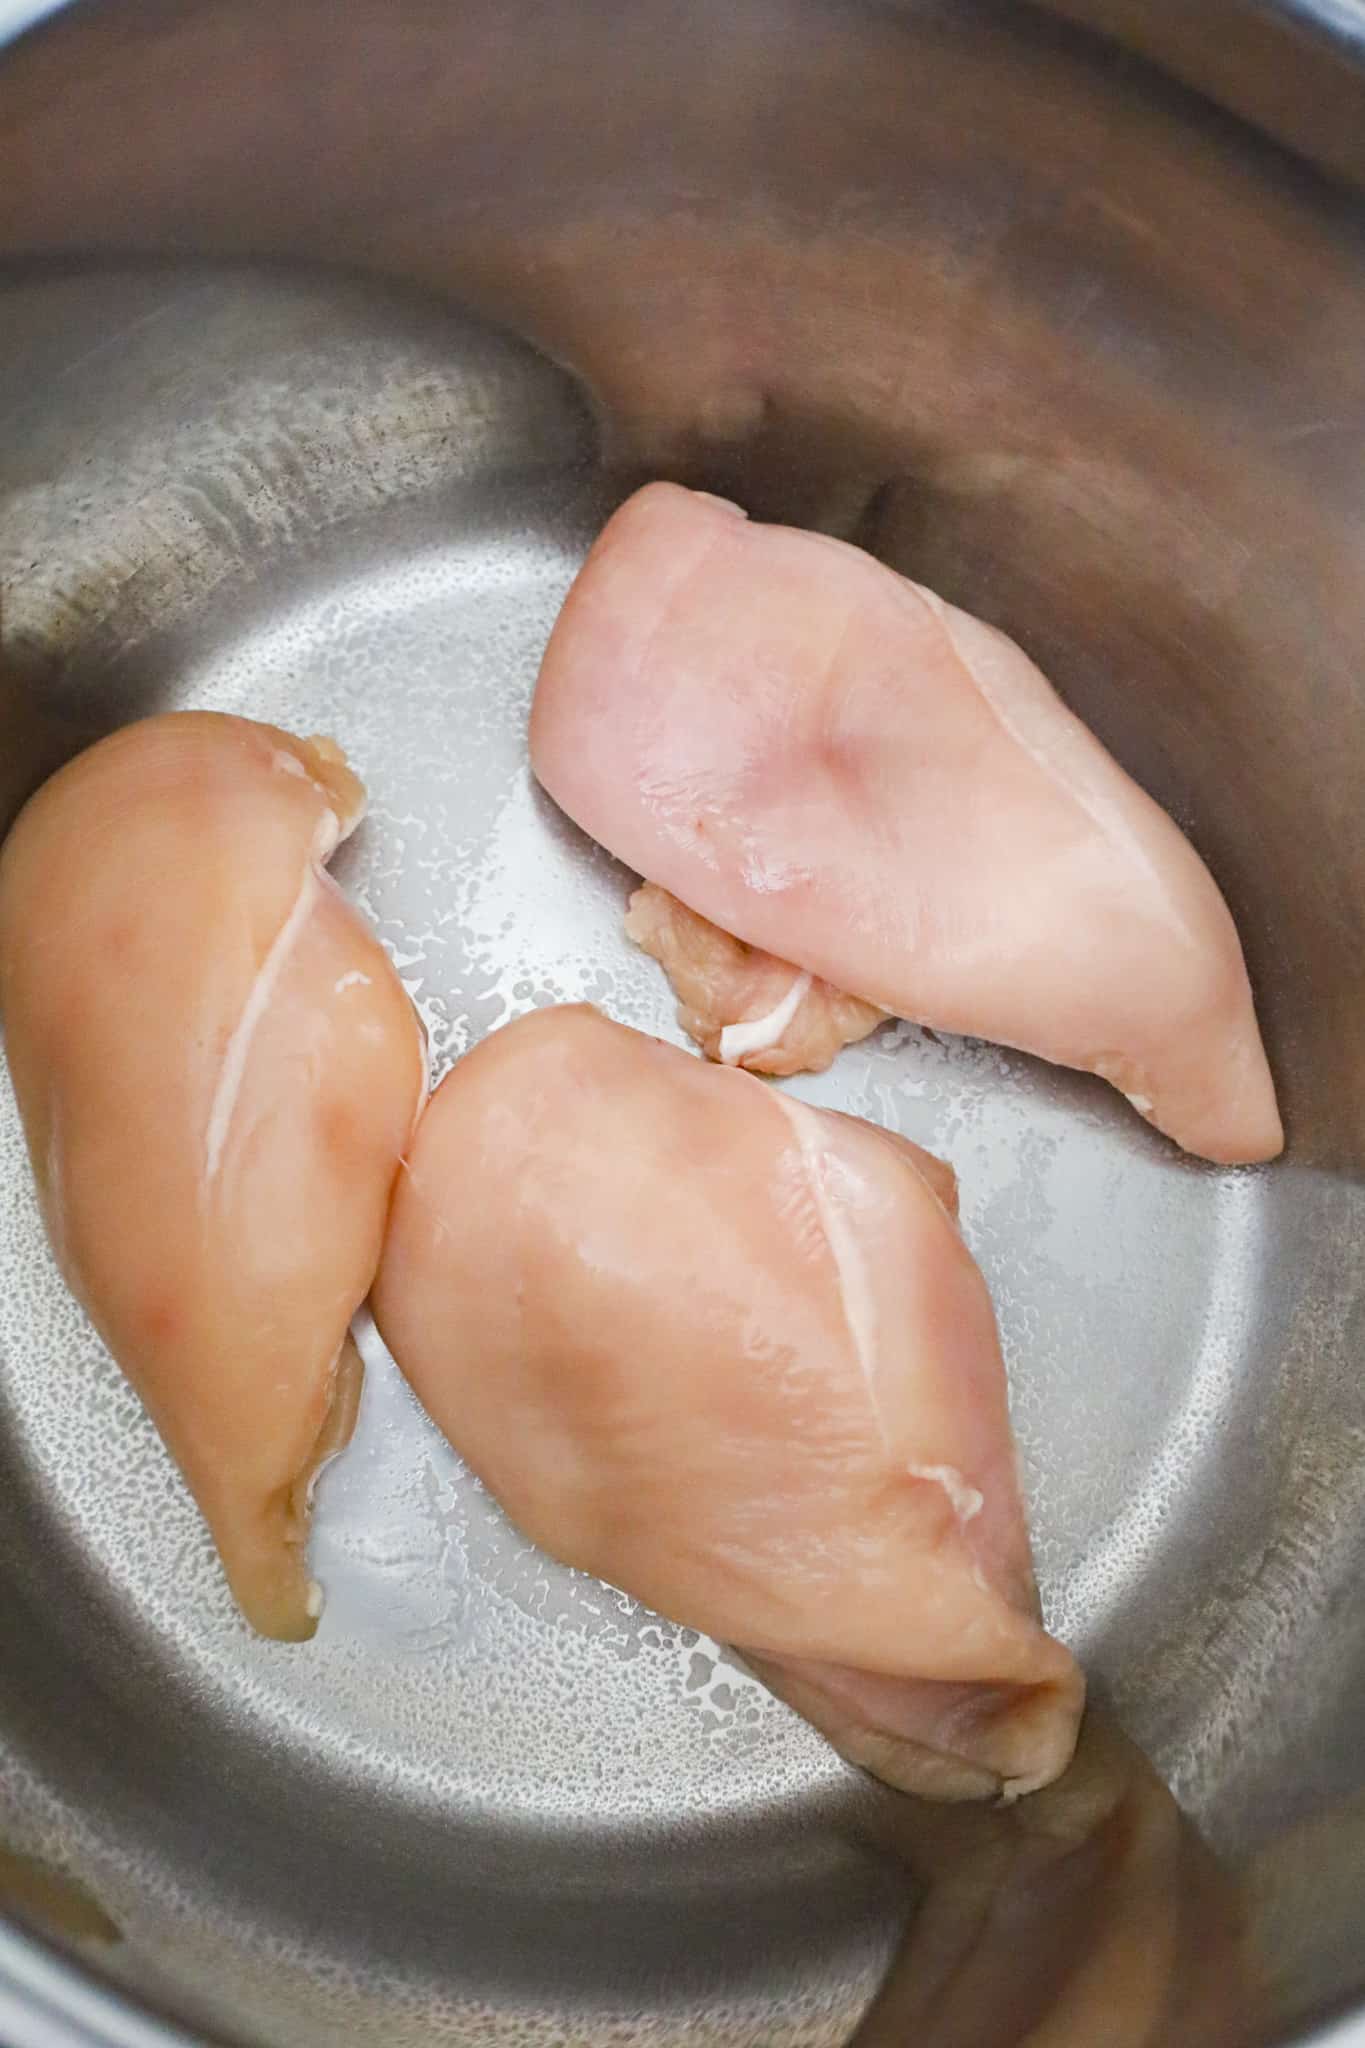 boneless, skinless chicken breasts in an Instant Pot